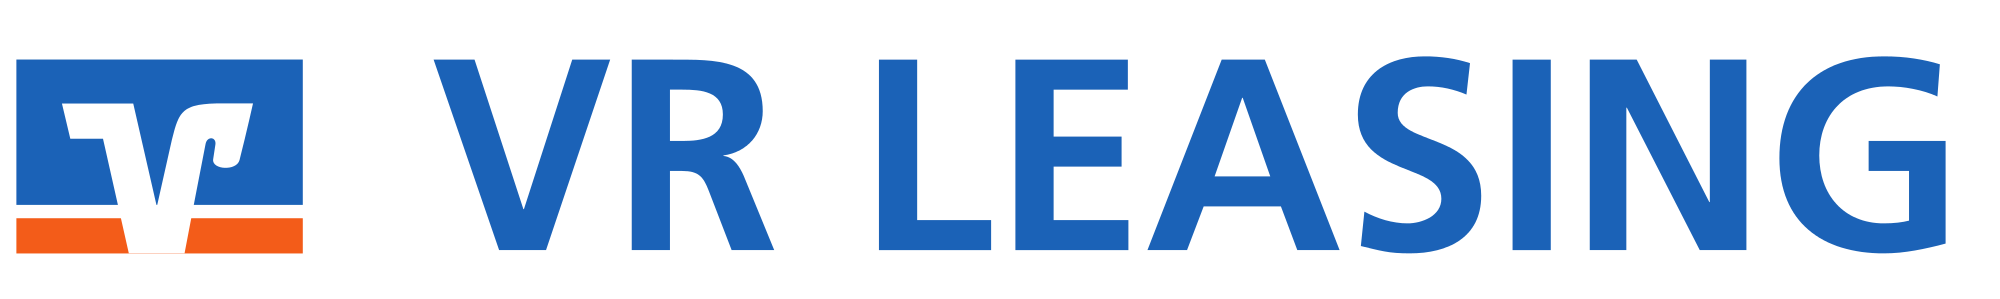 VR-Leasing-Logo.svg